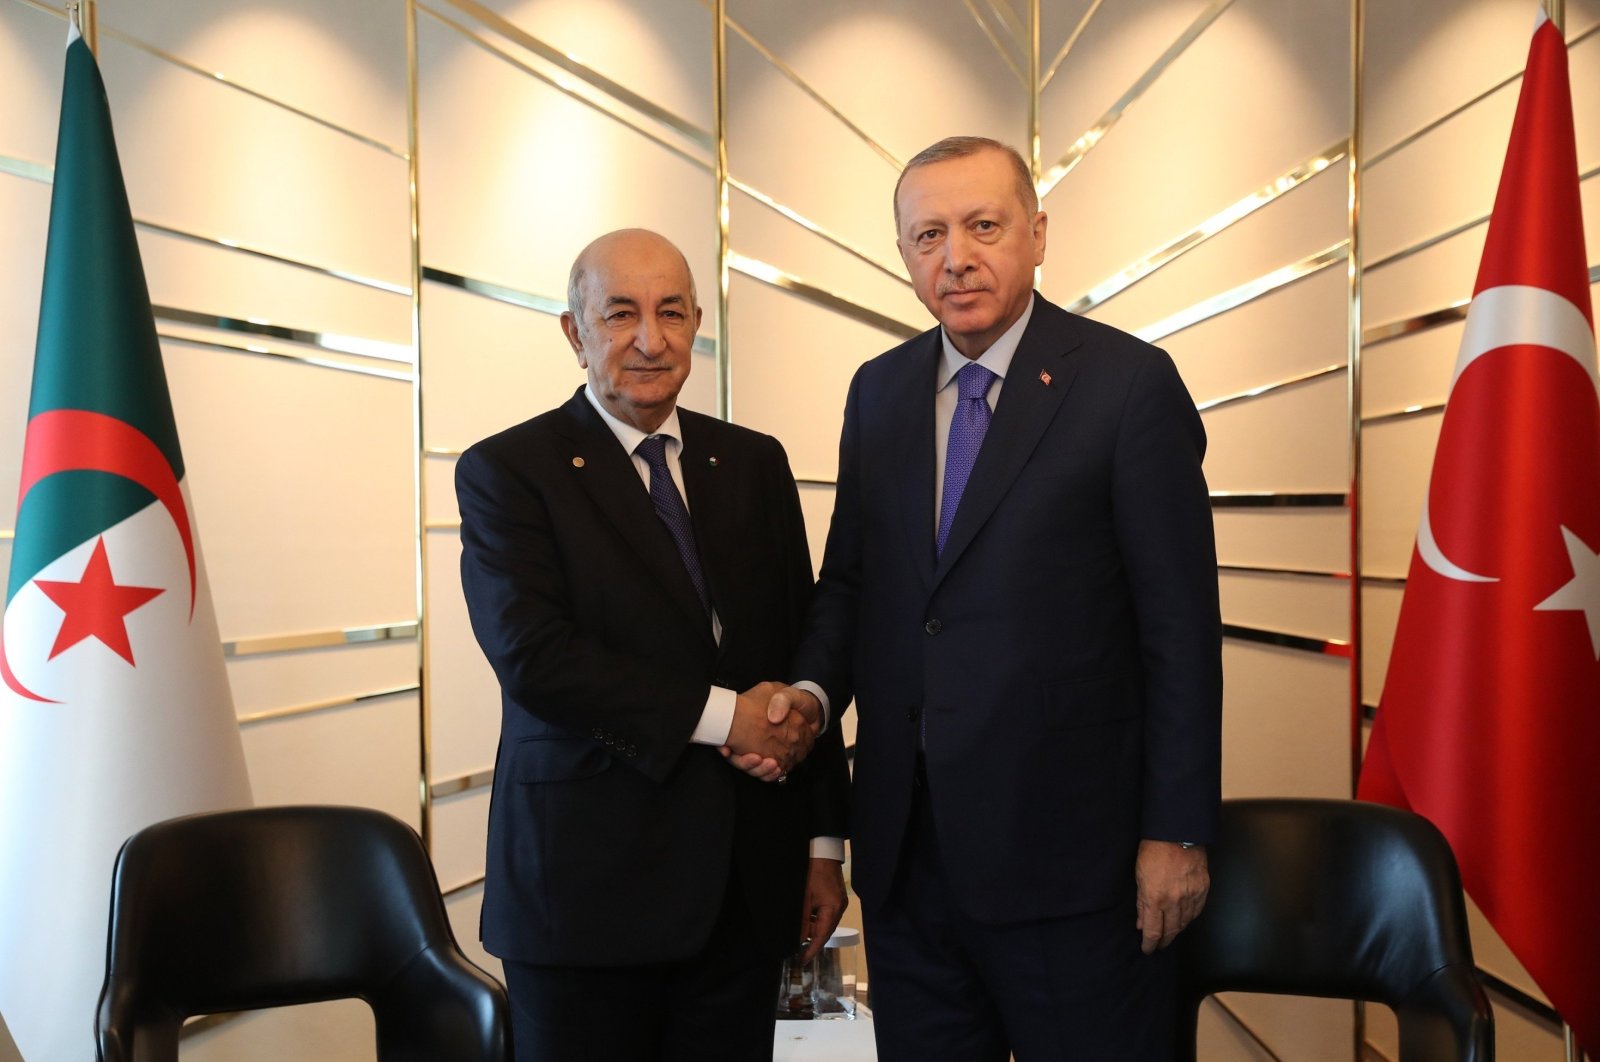 Turkish President Recep Tayyip Erdoğan (R) shakes hands with Algerian President Abdelmadjid Tebboune ahead of a conference on Libya in Berlin, Germany, Jan. 21, 2020. (IHA)